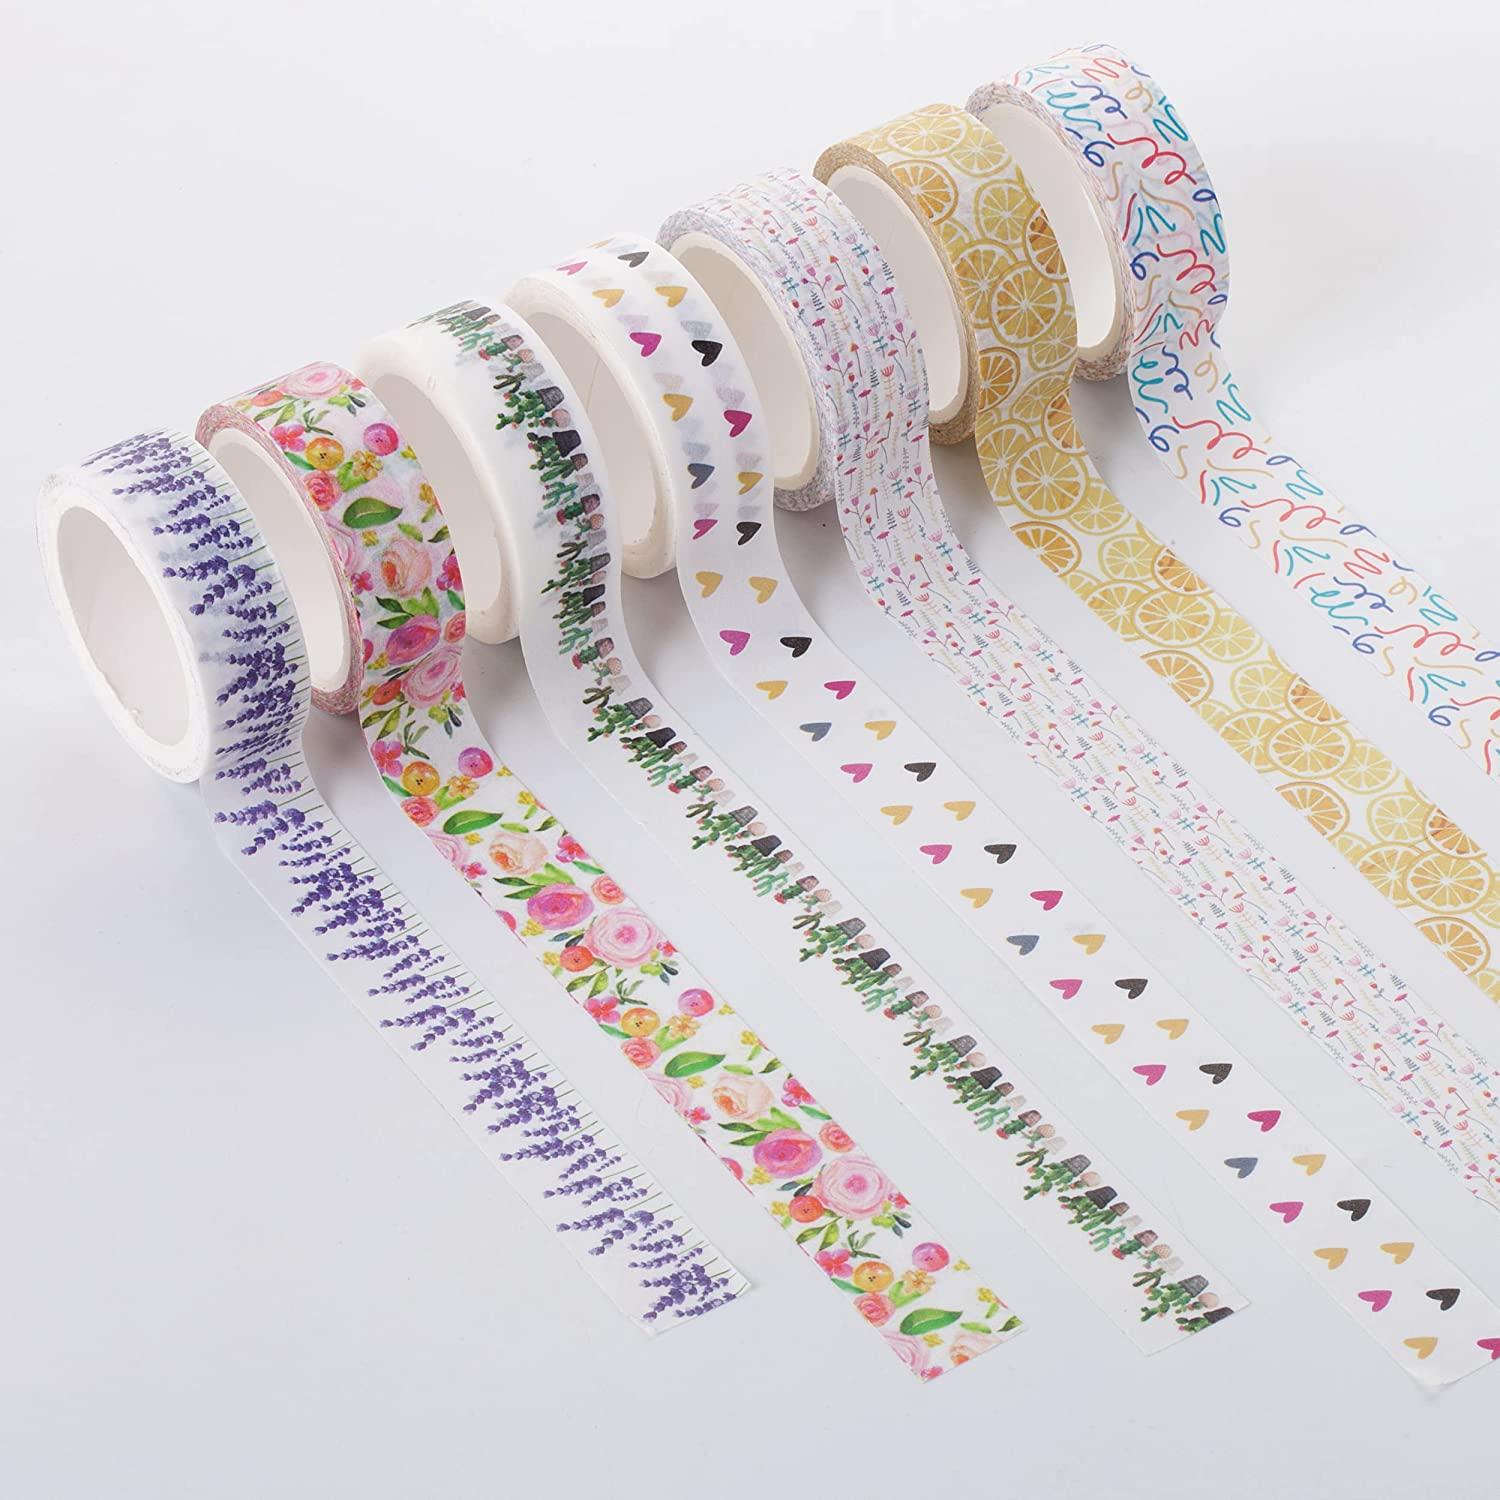 Mr. Pen- Grid Washi Tape Set, 7 Rolls, 0.6, Washi Tape for Journaling,  Decorative Tape - Mr. Pen Store